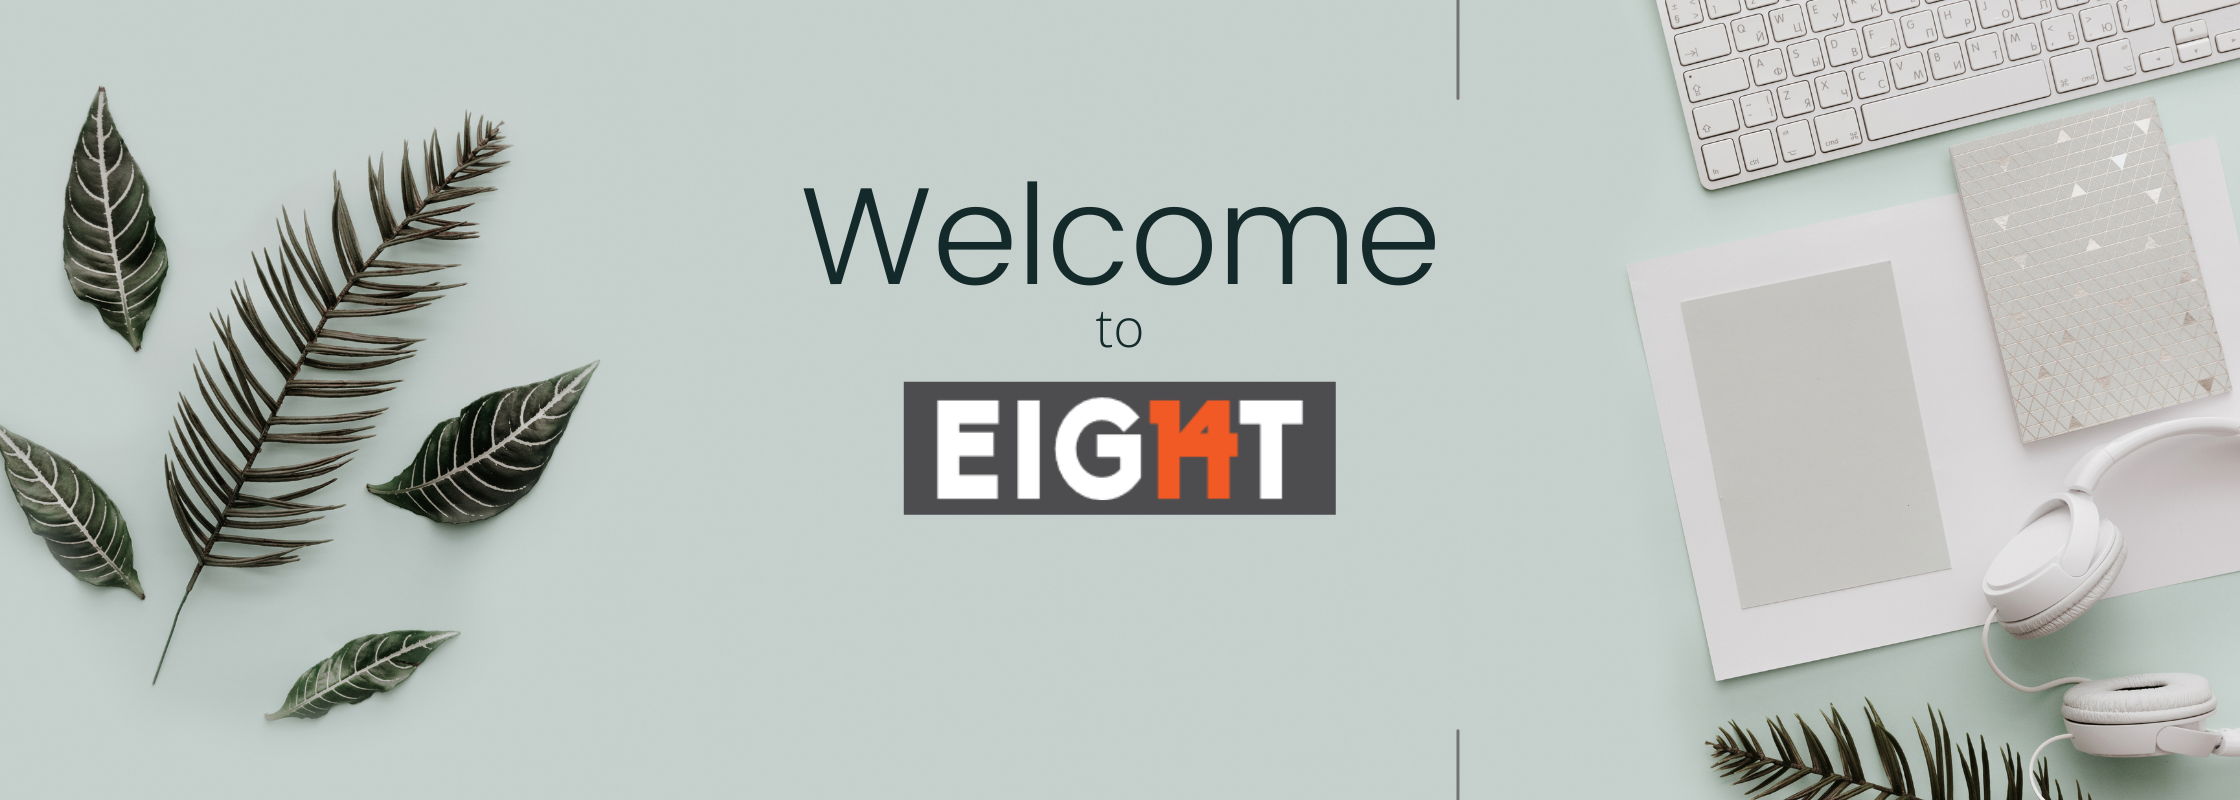 EIG14T Welcomes Erik Schaefer, Project Manager